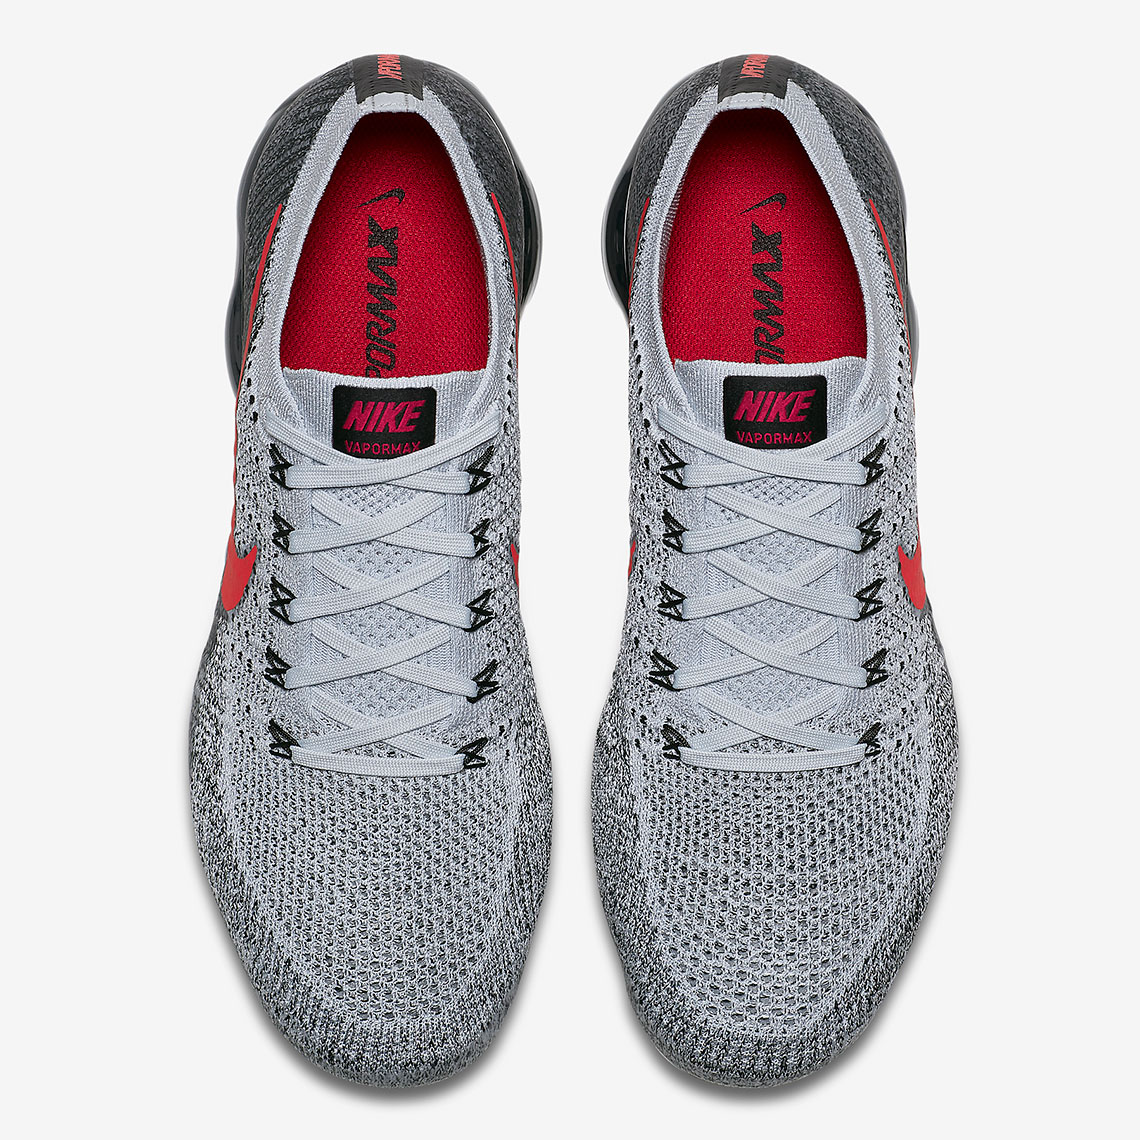 Nike Vapormax 849558-020 Grey/Red | SneakerNews.com